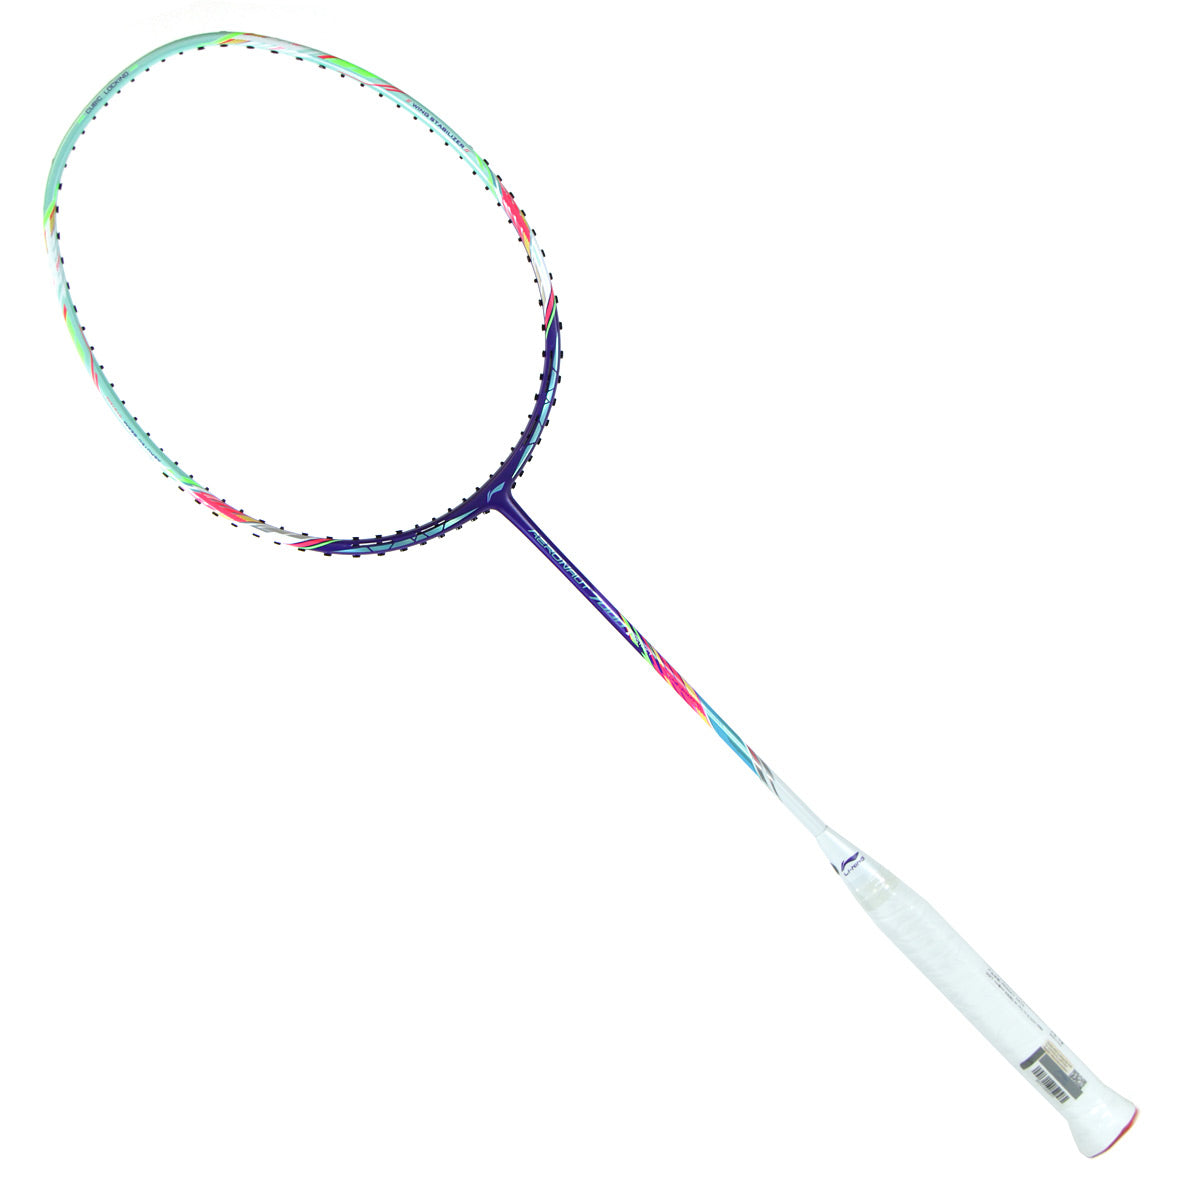 li-ning aeronaut 7000 instinct badminton racket